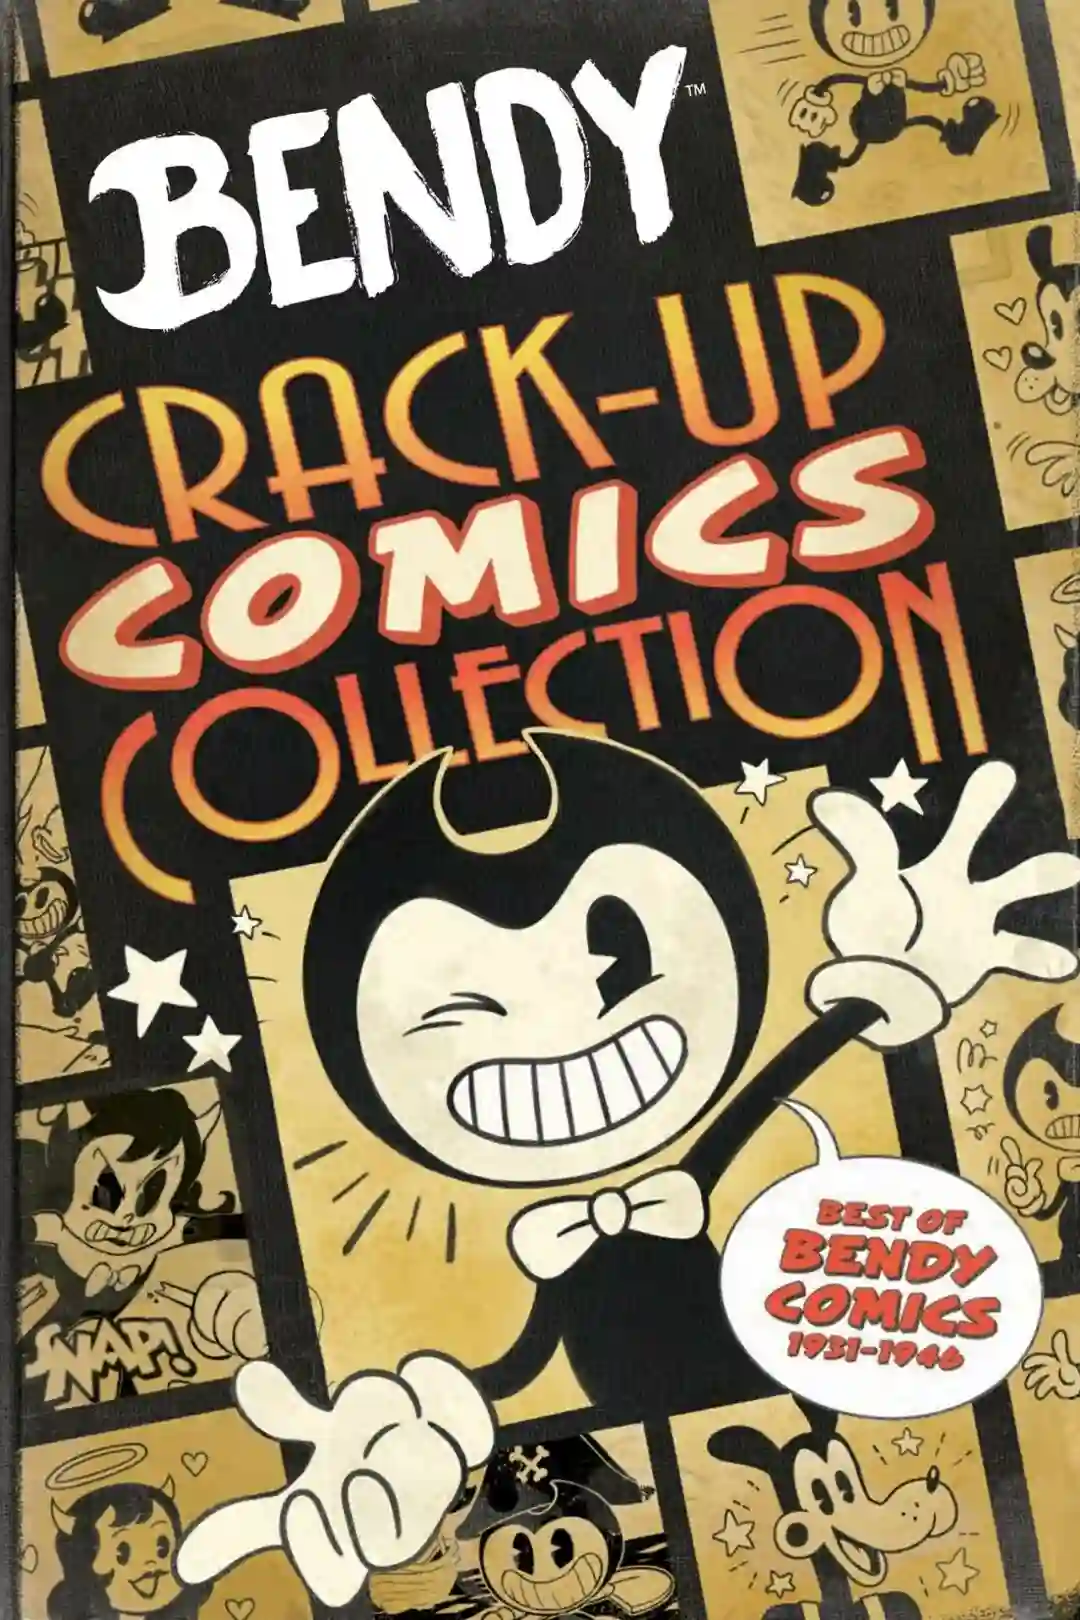 BENDY CRACK-UP COMICS COLLECTION封面和副页预览